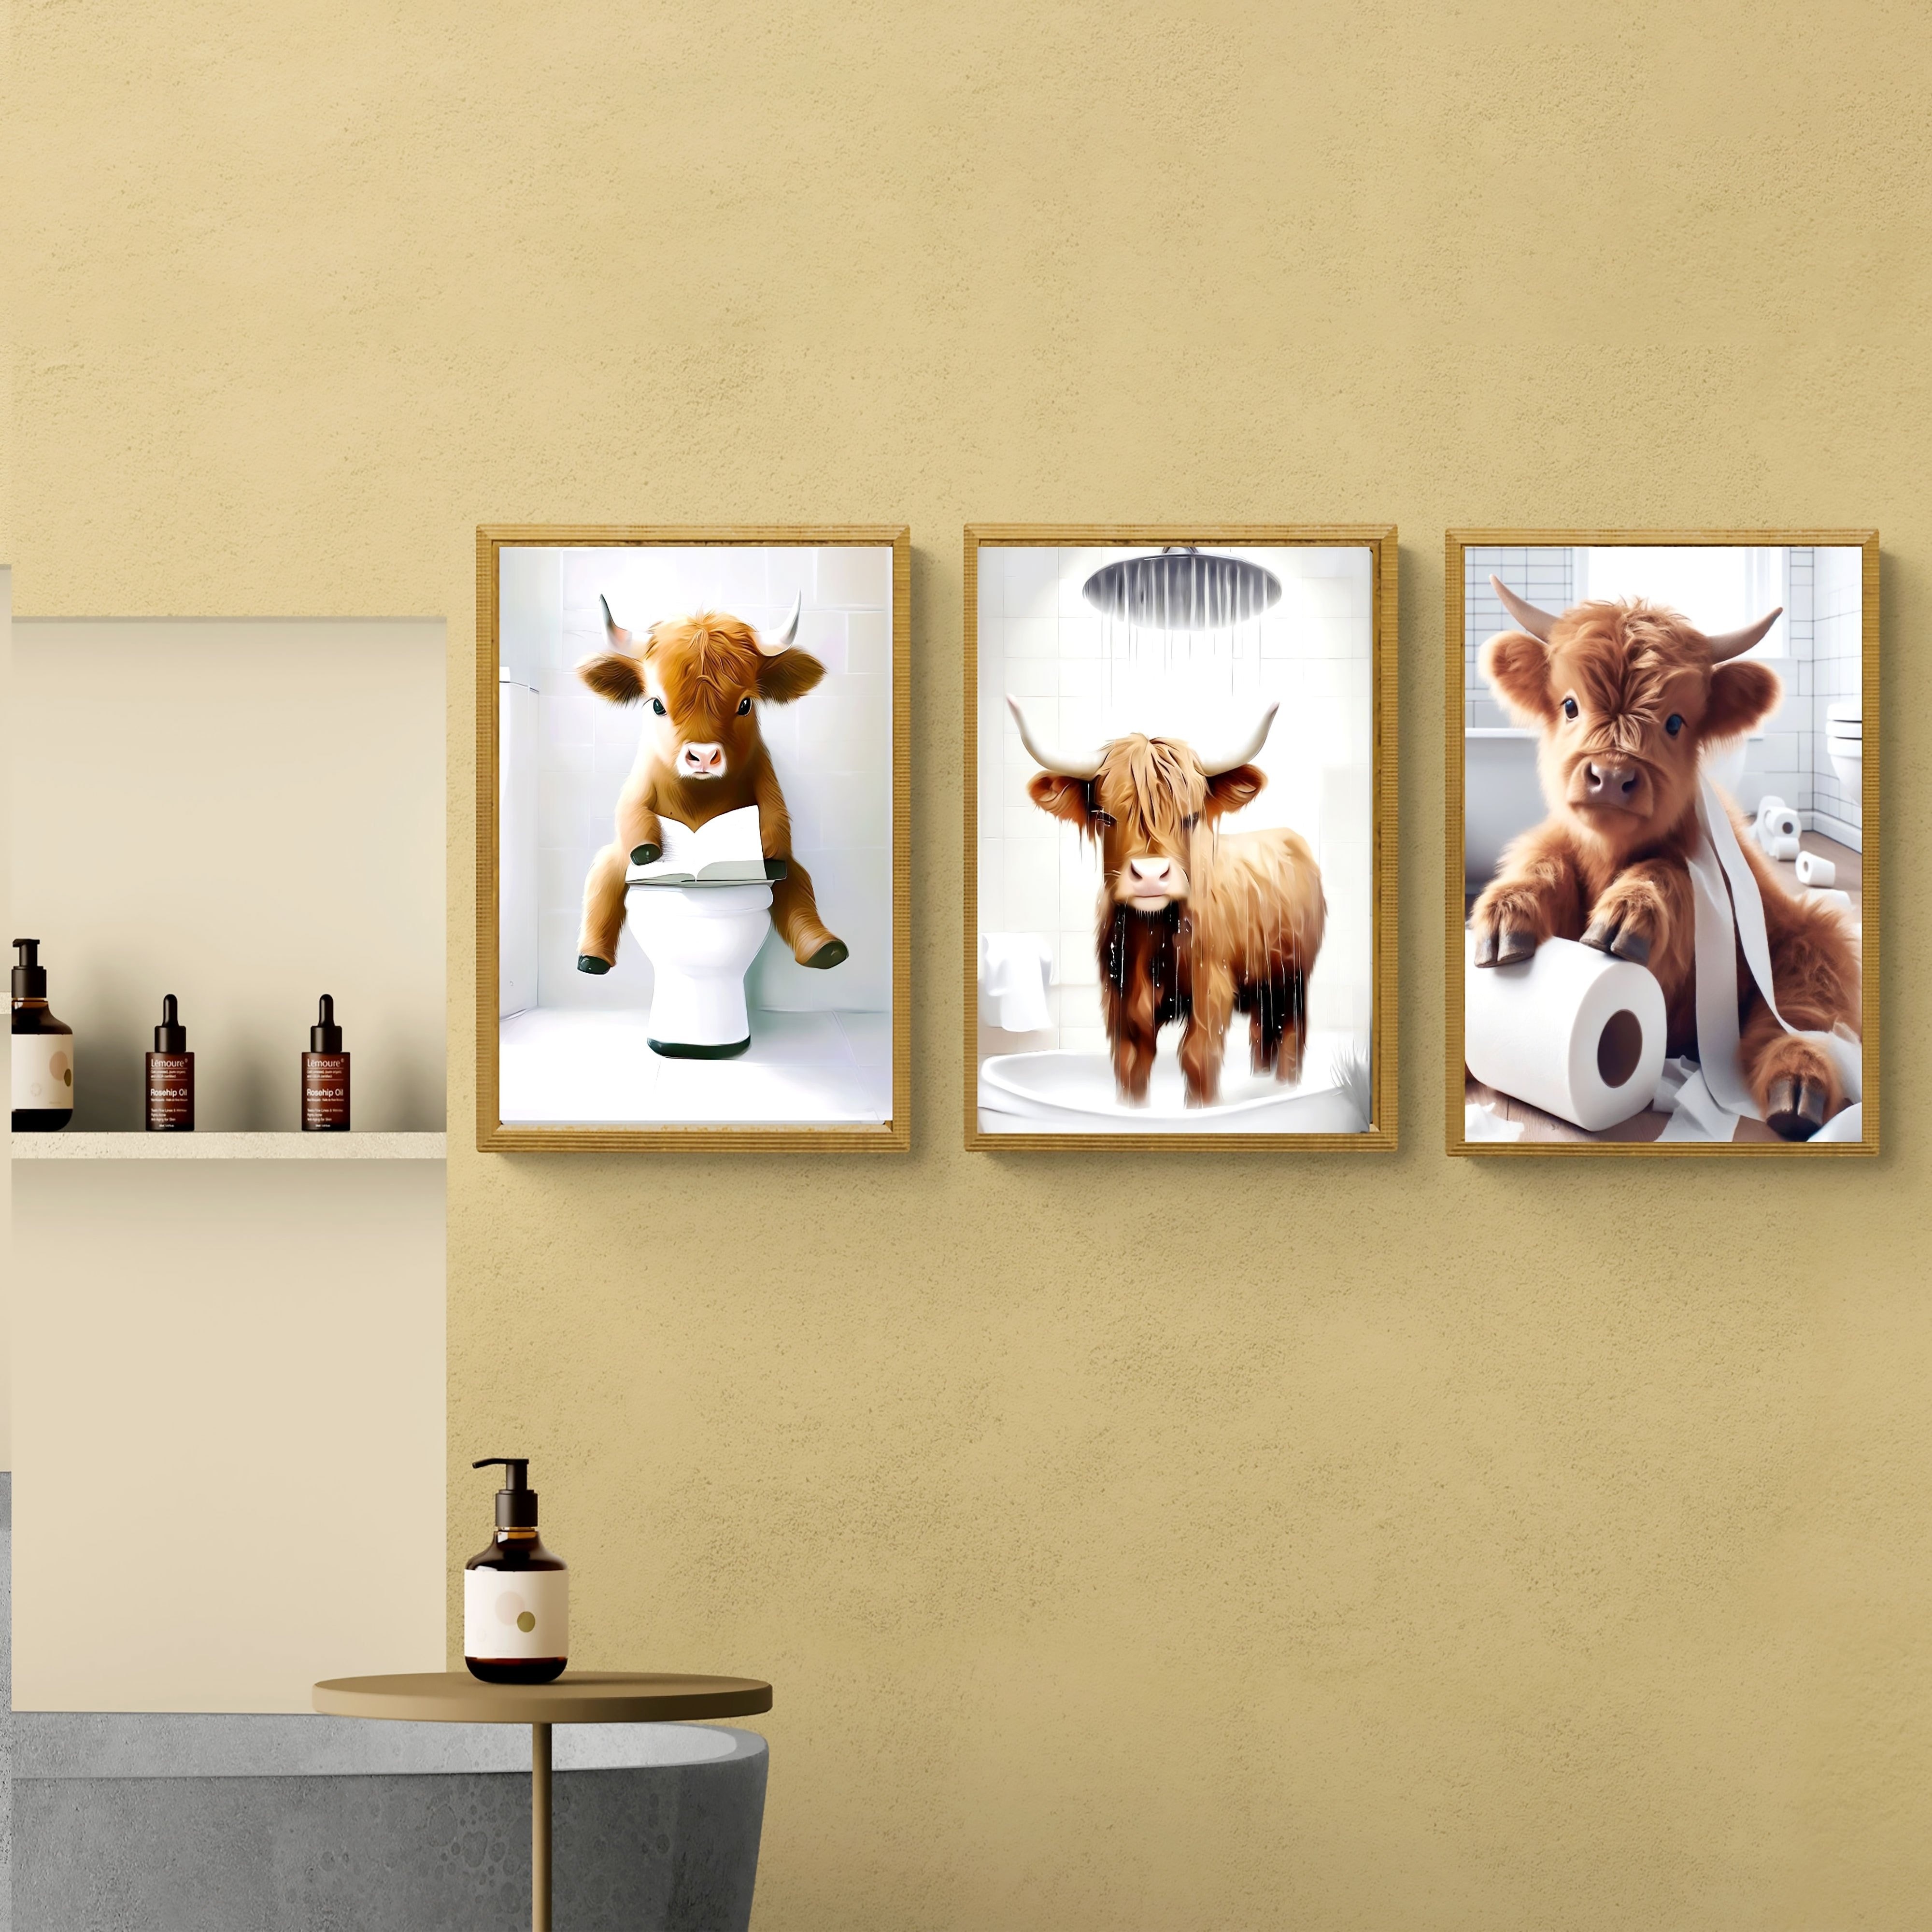 

3-piece Scottish Highland Cow Canvas Art Prints - Humorous Farmhouse Bathroom Decor, Modern Home Wall Art, Cute Ratting Cow Design, Unframed